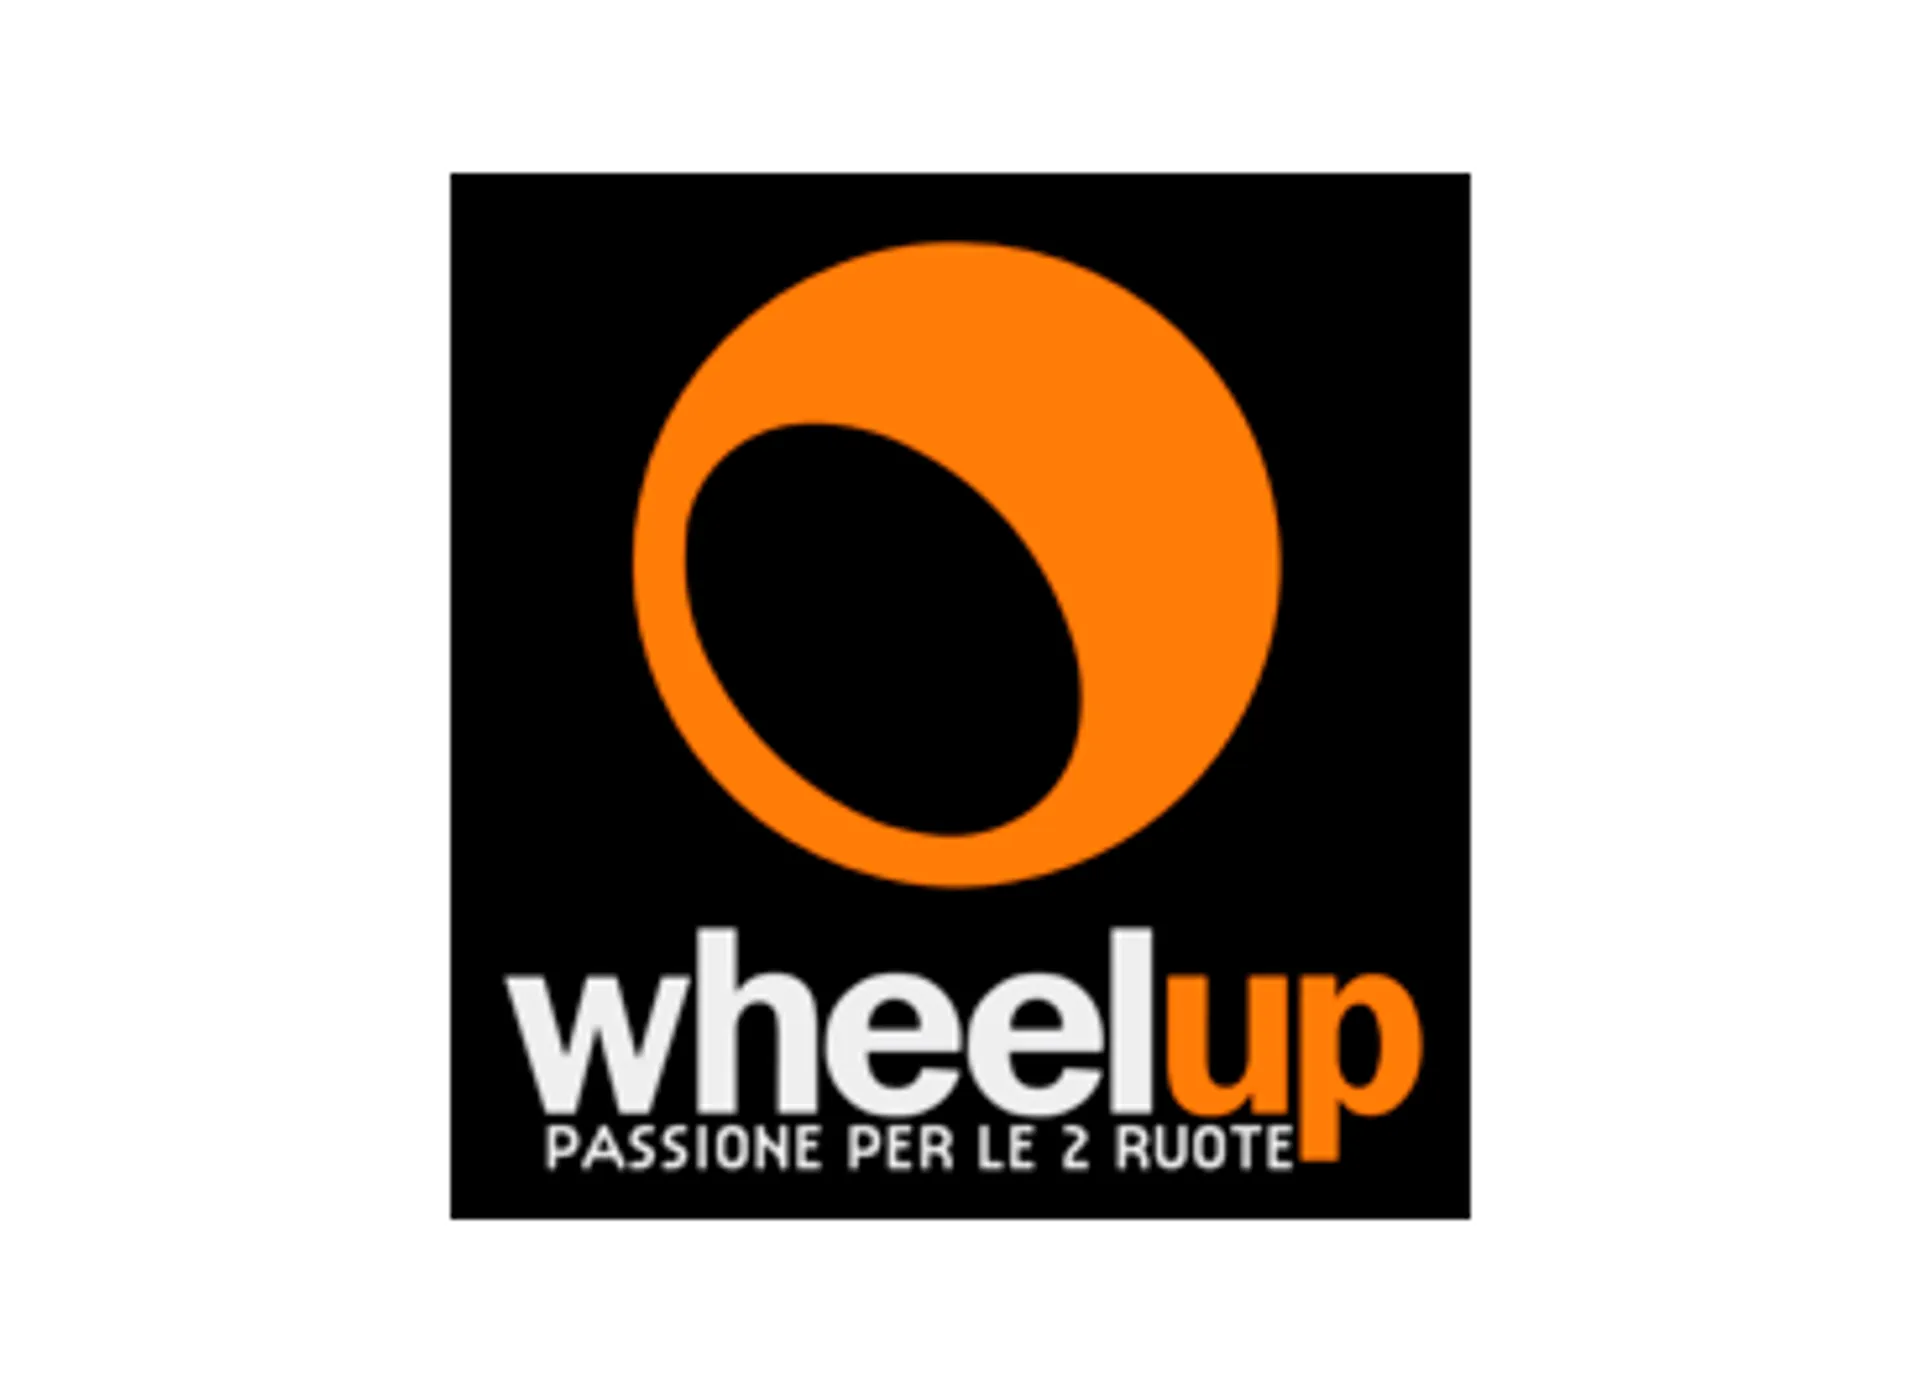 WHEELUP logo